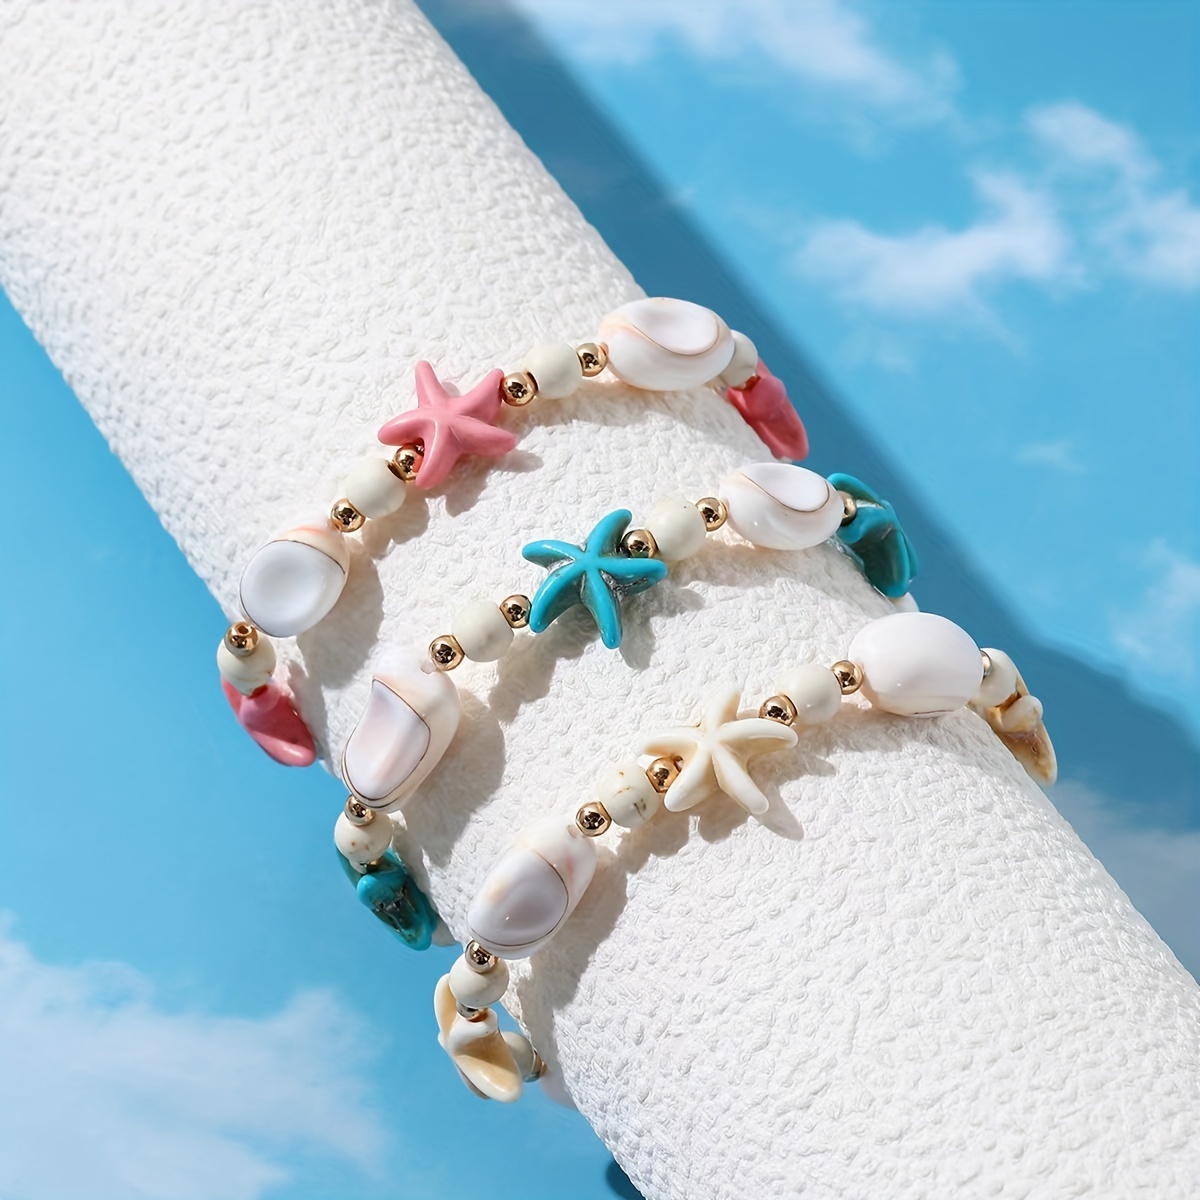 

Trendy Summer Macaron Color Charm Bracelet, Ceramic Shell And Starfish Shaped Charm Bracelet Beach Vacation Hand Jewlery For Women